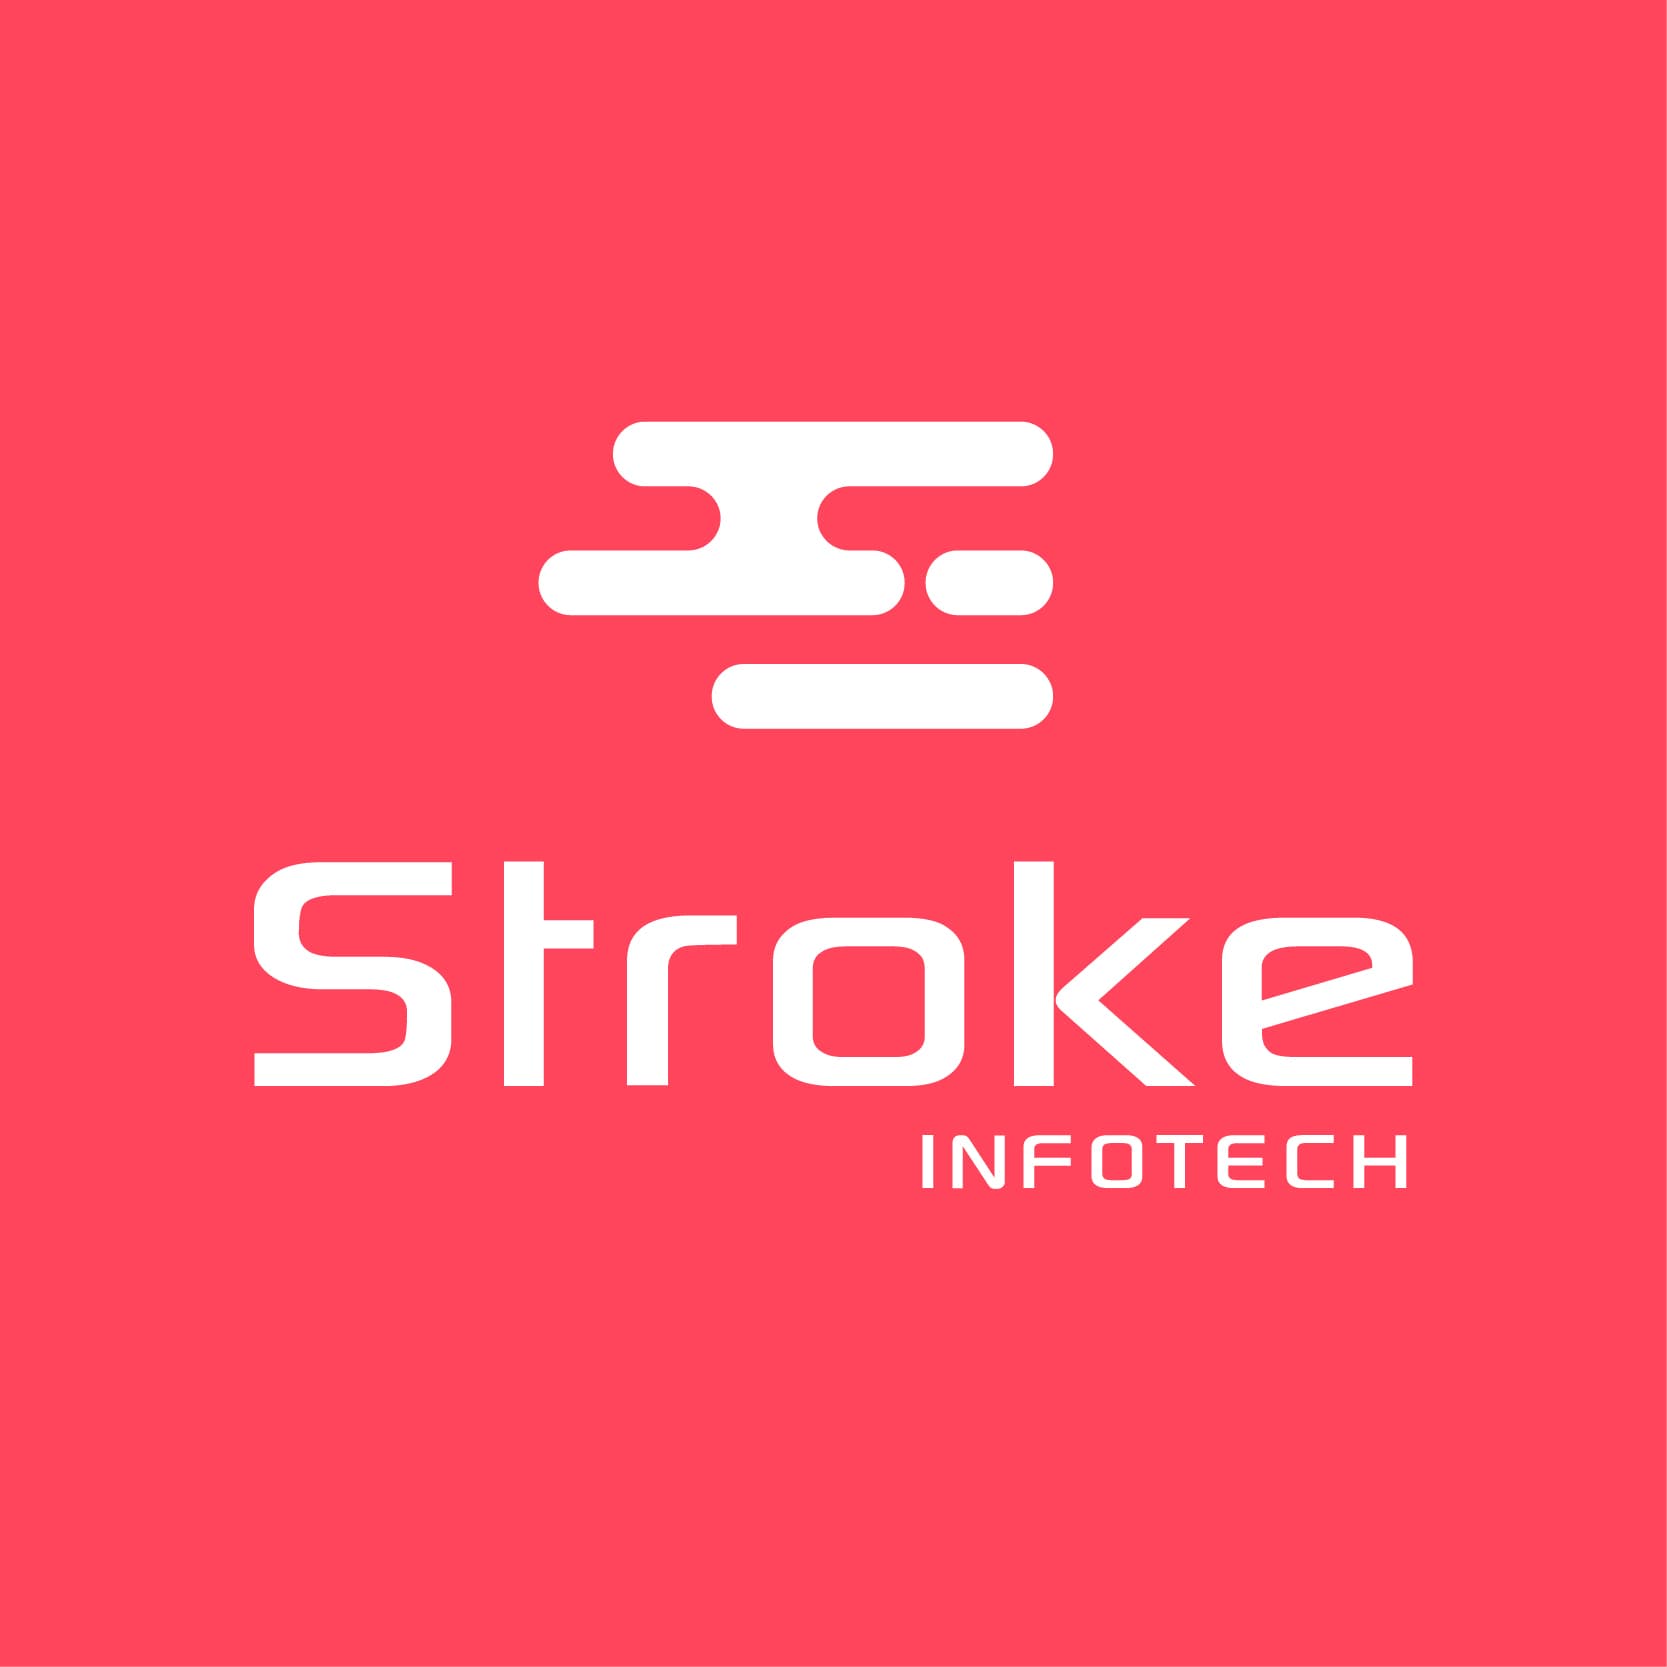 Stroke Infotech's logo